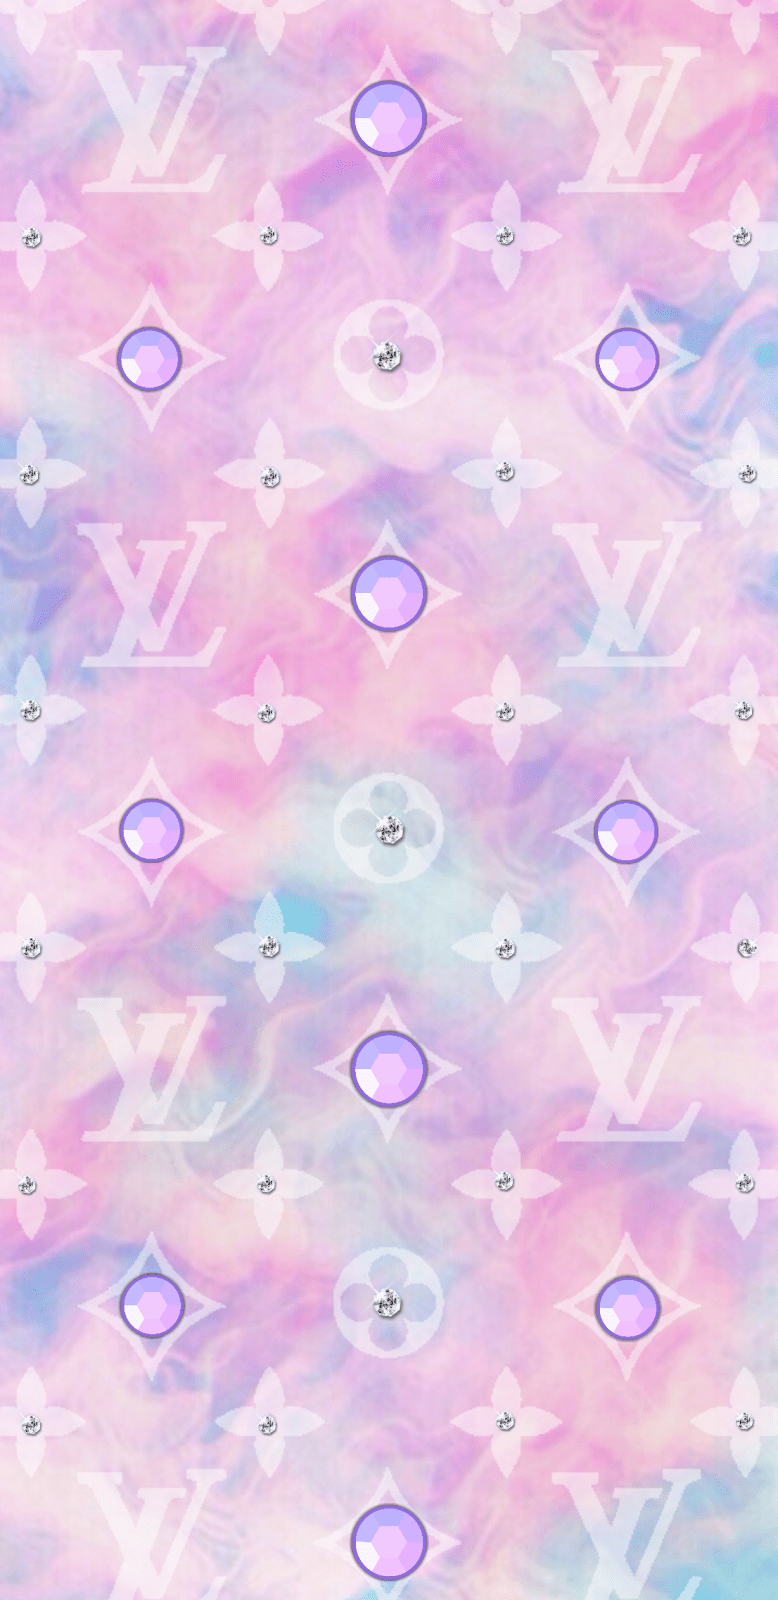 Louis Vuitton Violet wallpaper by timothyczech - Download on ZEDGE™